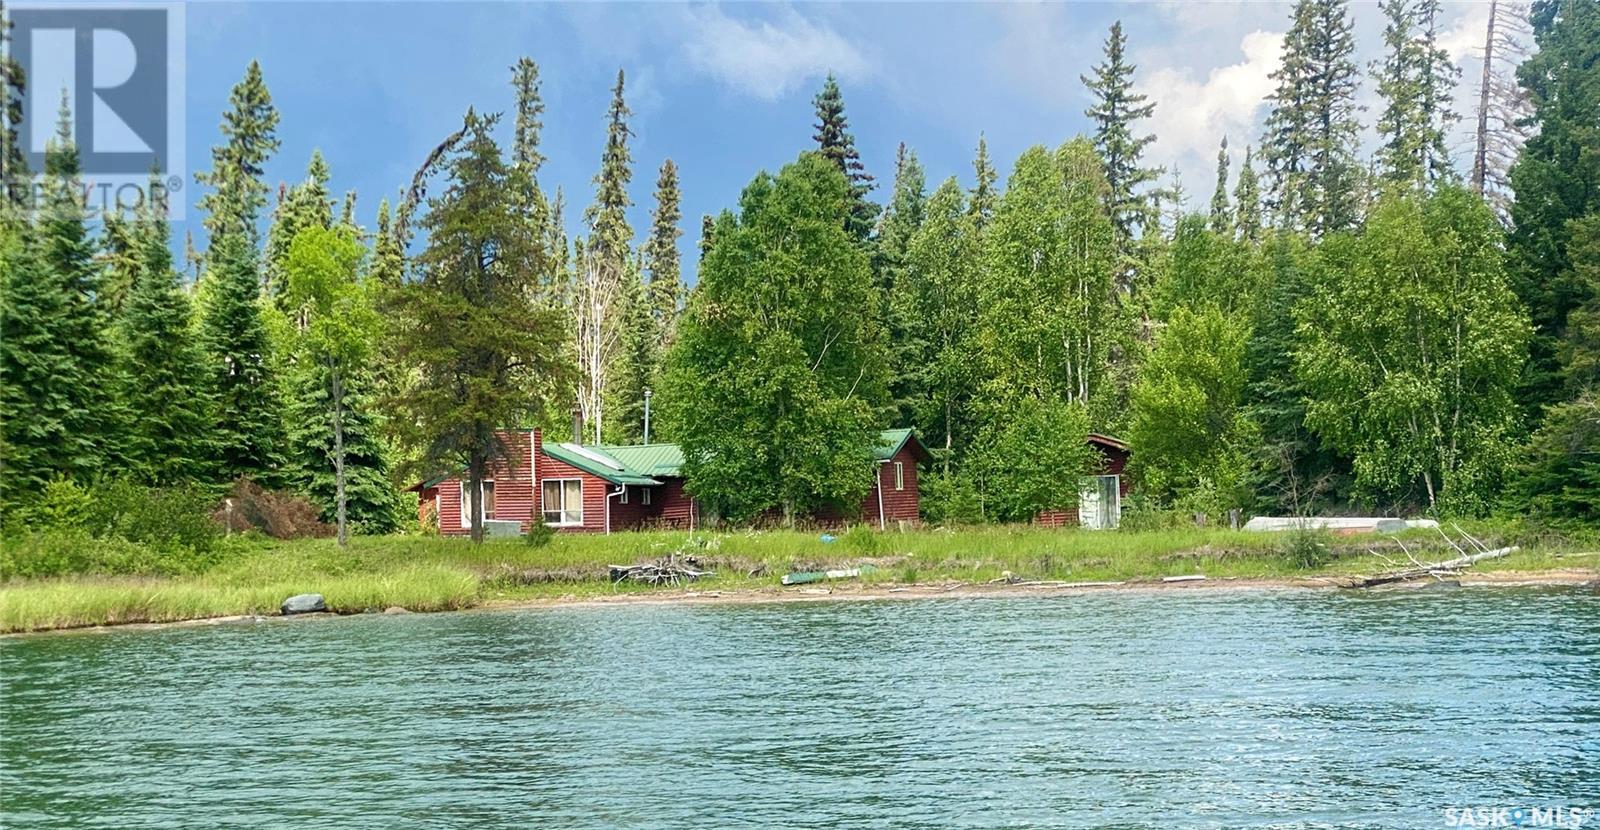 Titled Cabin on Rainy Island, lac la ronge, Saskatchewan